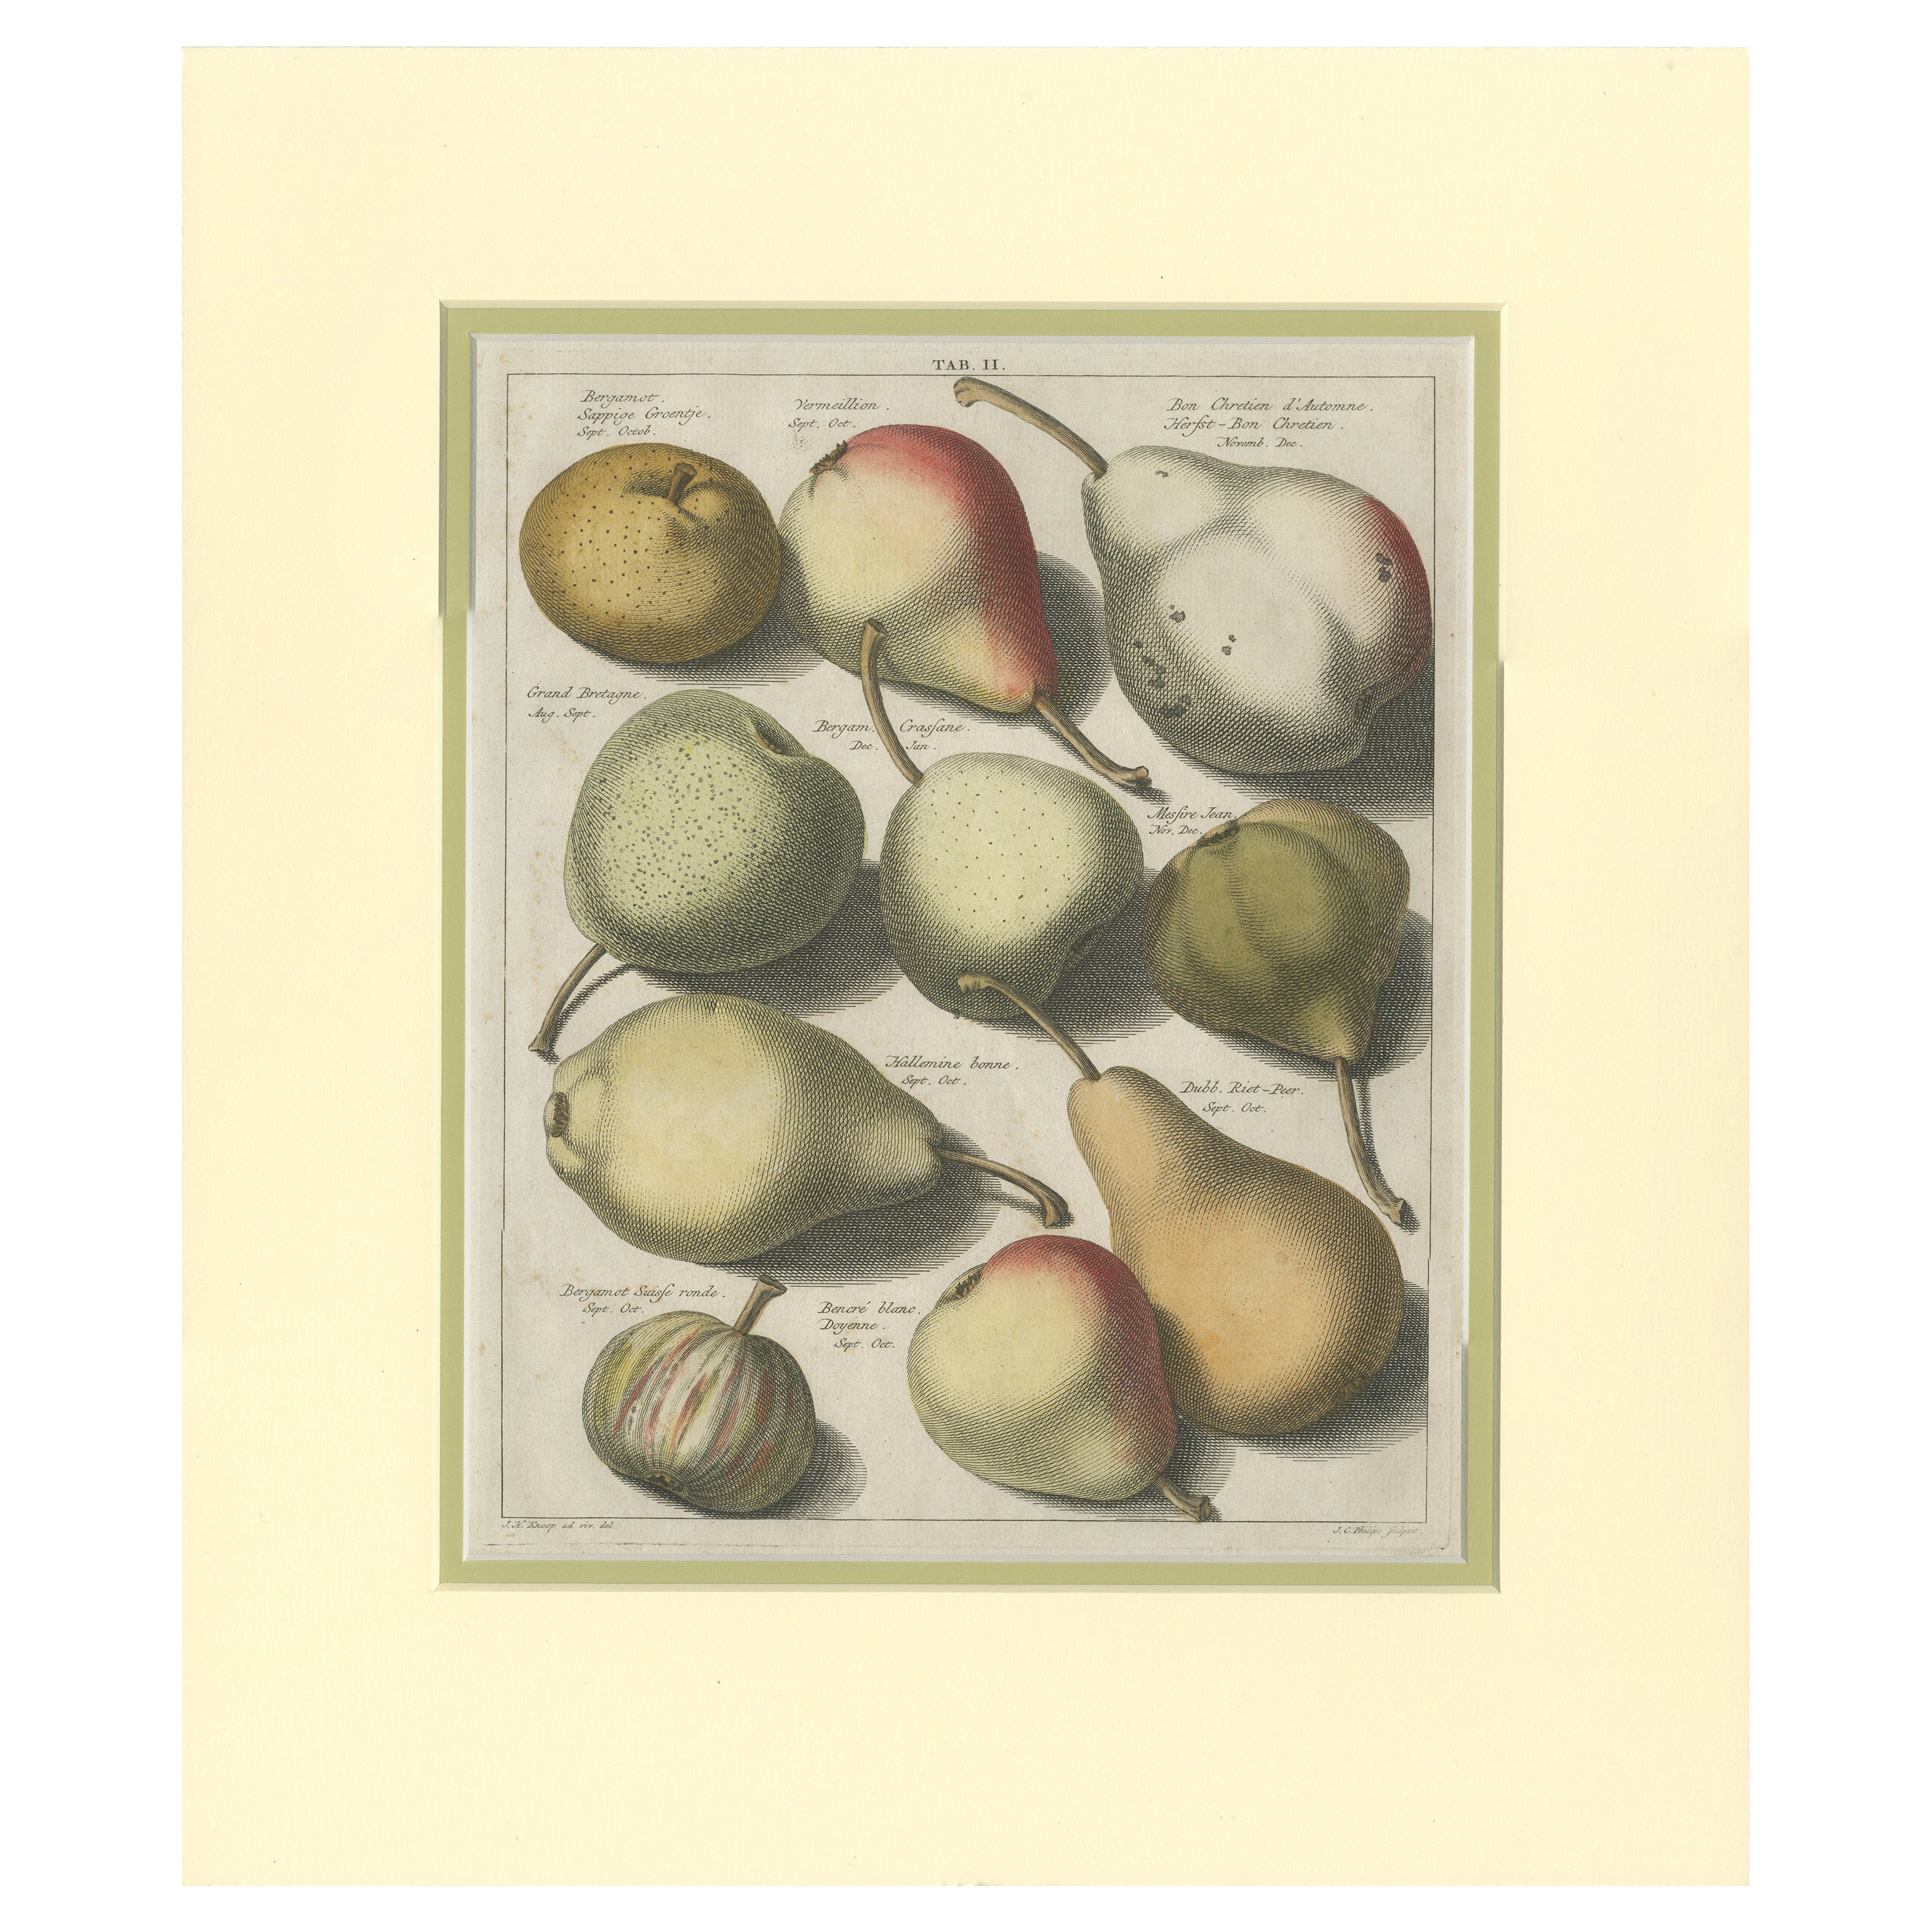 Tab II Antique Print of Various Pears by Knoop '1758' For Sale